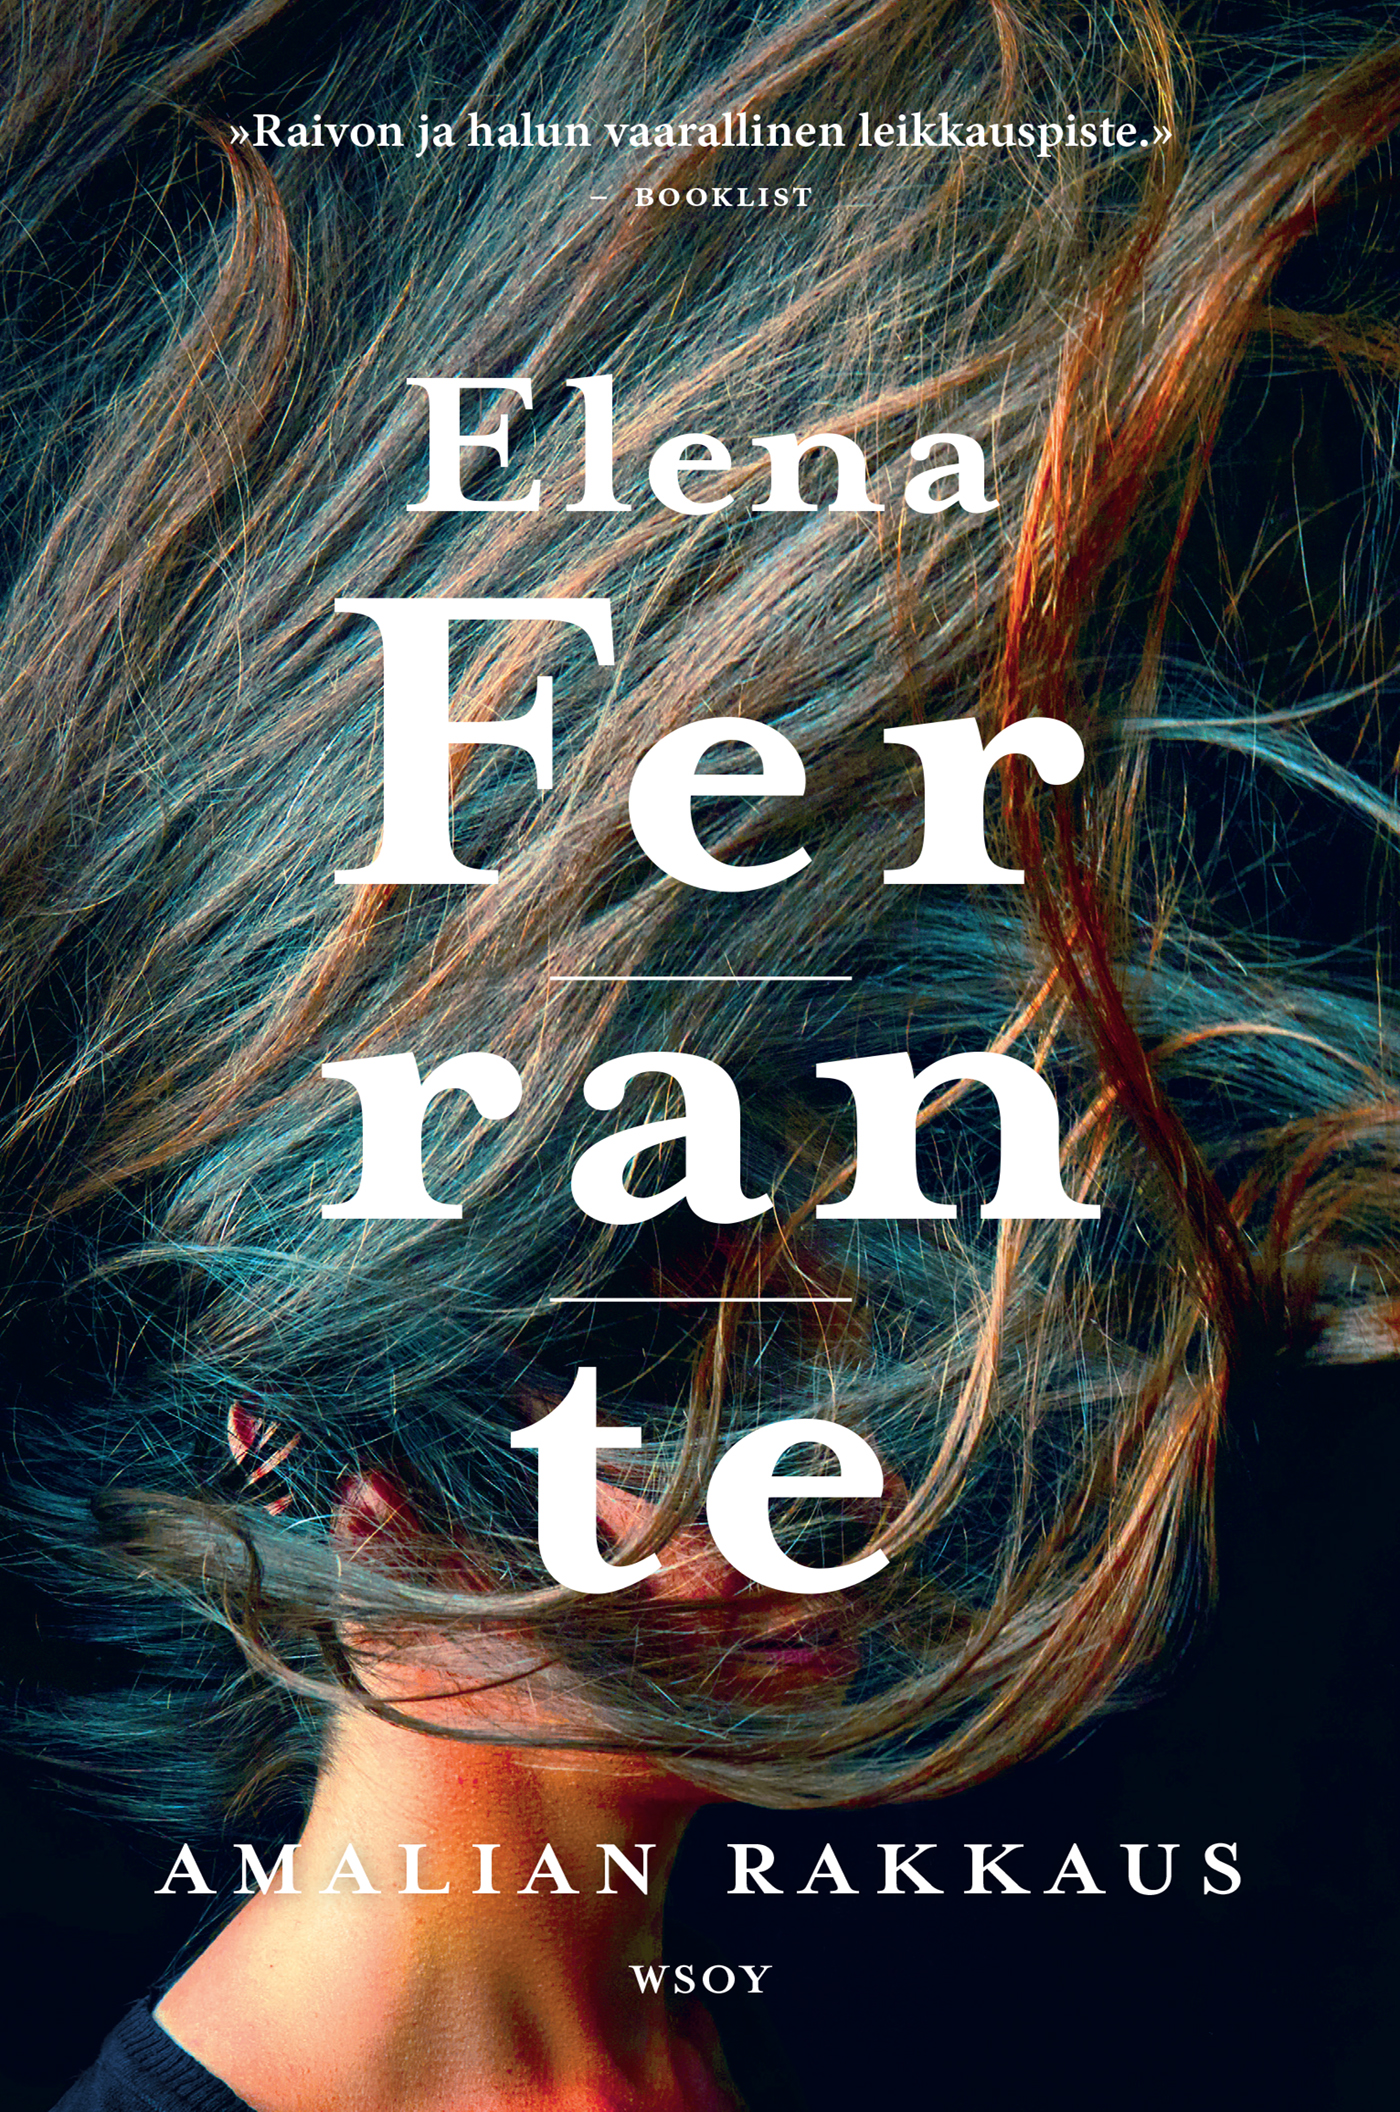 Ferrante, Elena - Amalian rakkaus, e-kirja